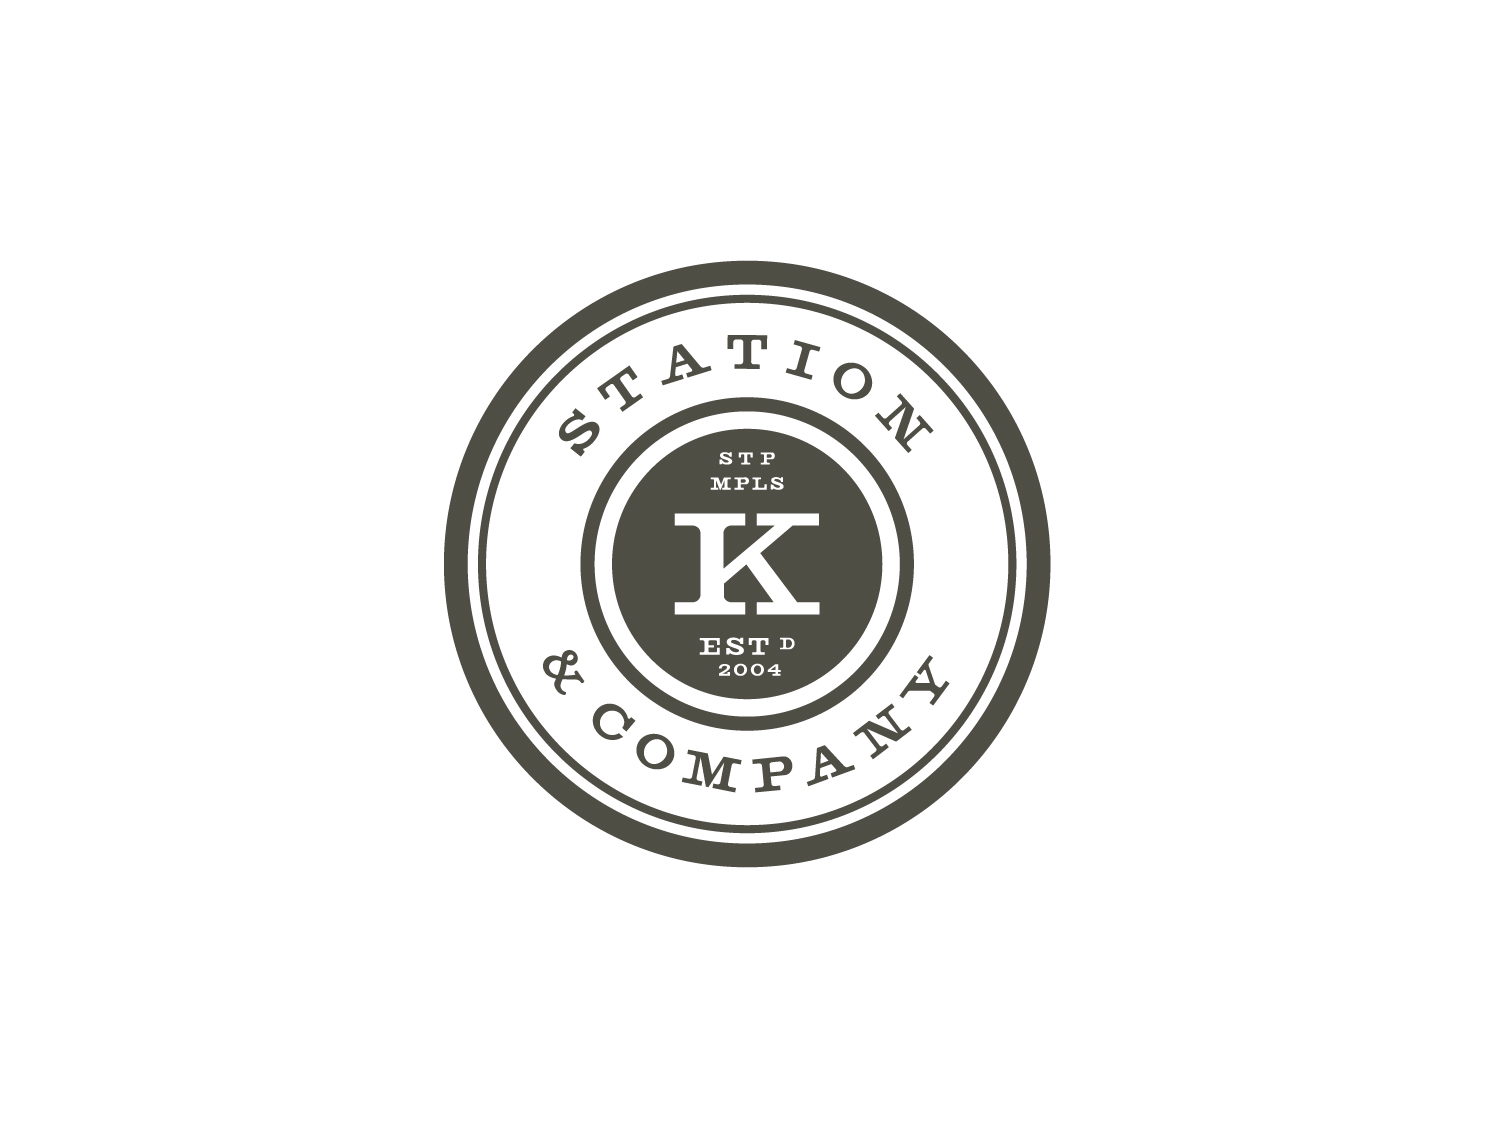 Station-K-and-Co-logo-01b.jpg